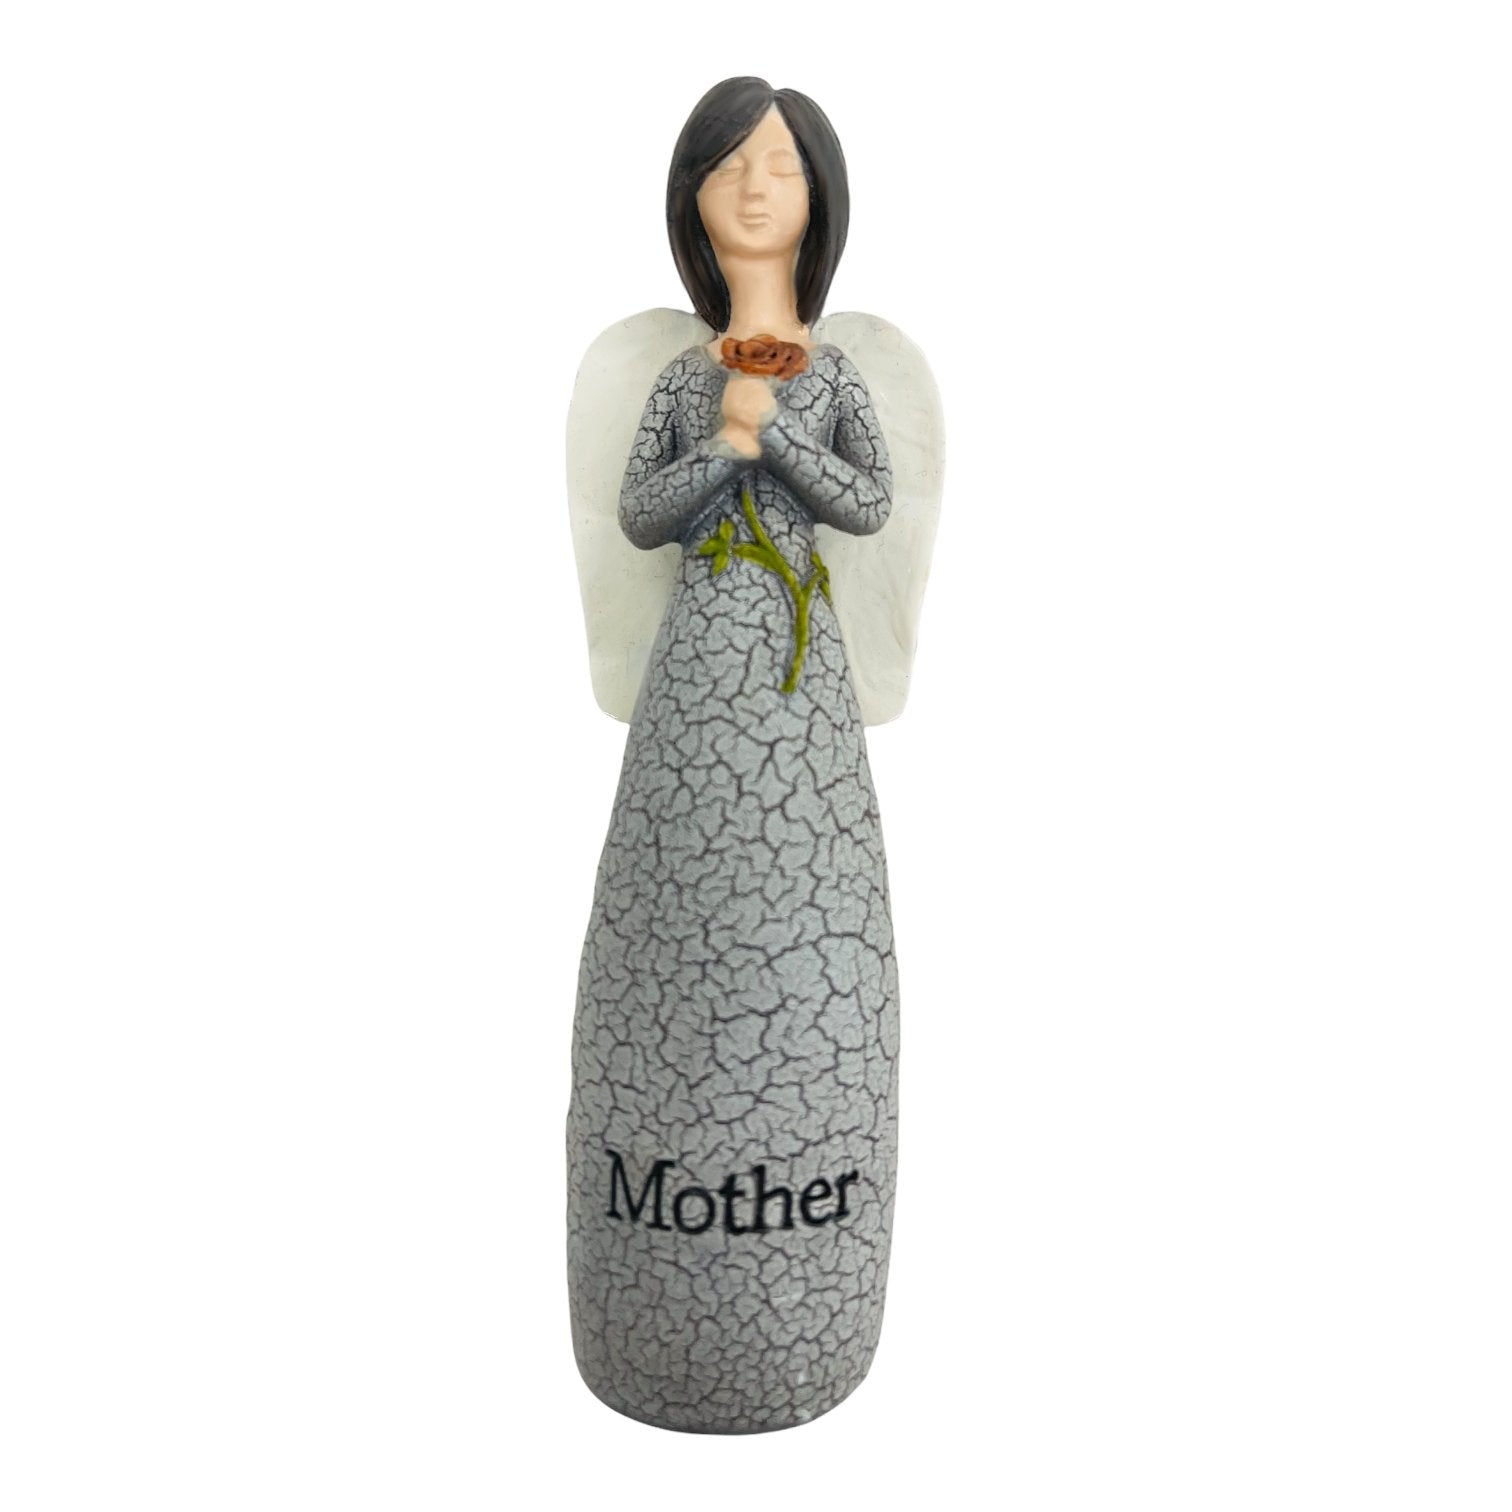 Mother Miniature Memorial Angel Figurine - Celebrate Prints